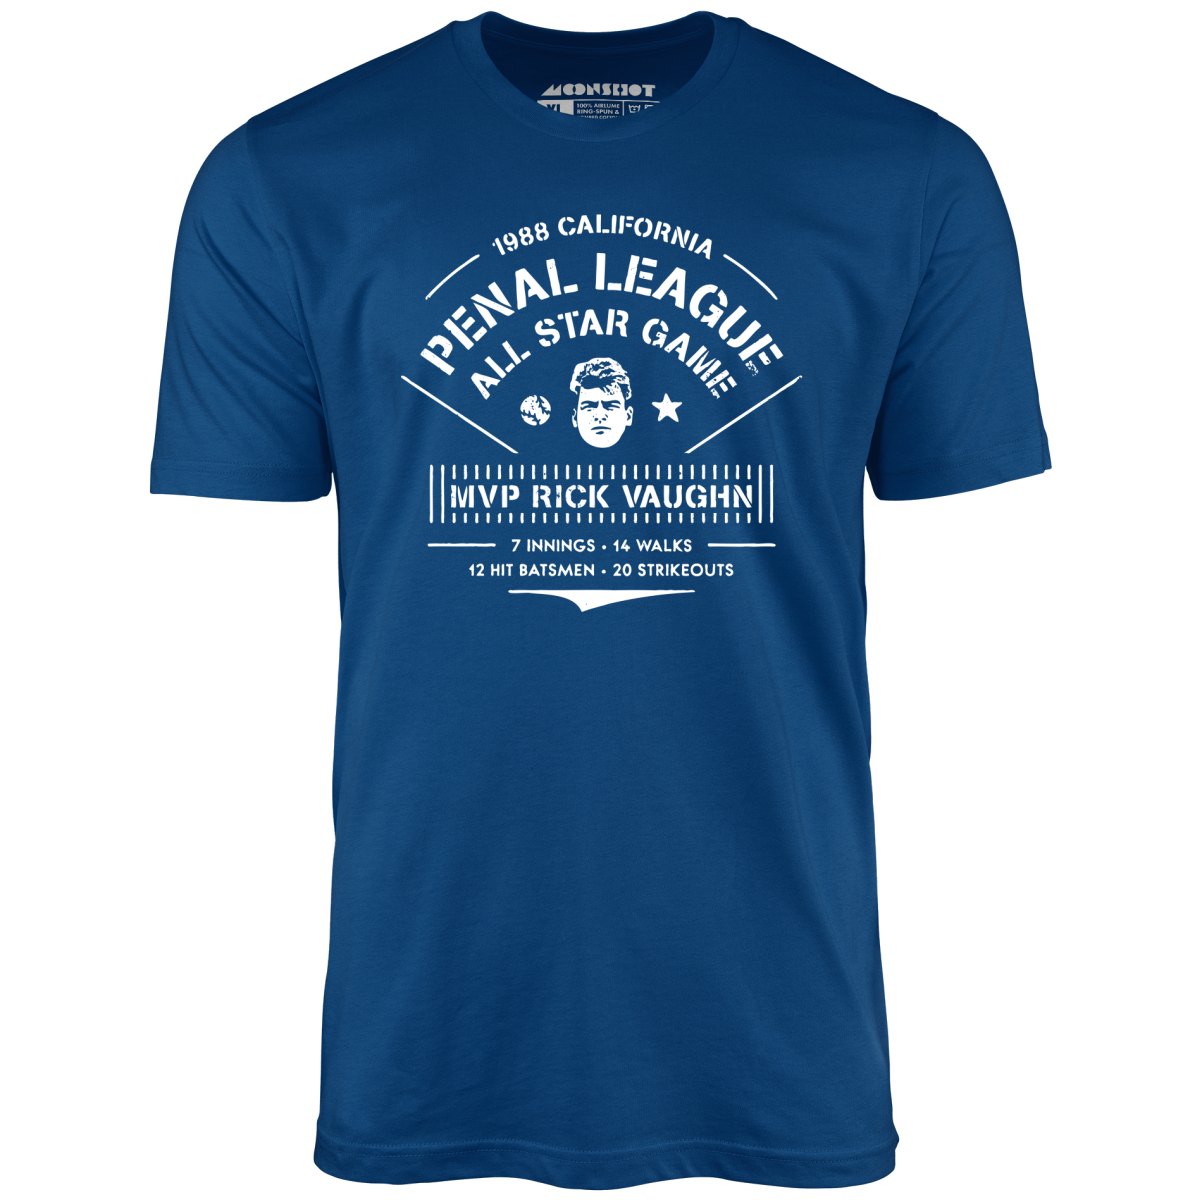 California Penal League All Star Game MVP Rick Vaughn Shirt